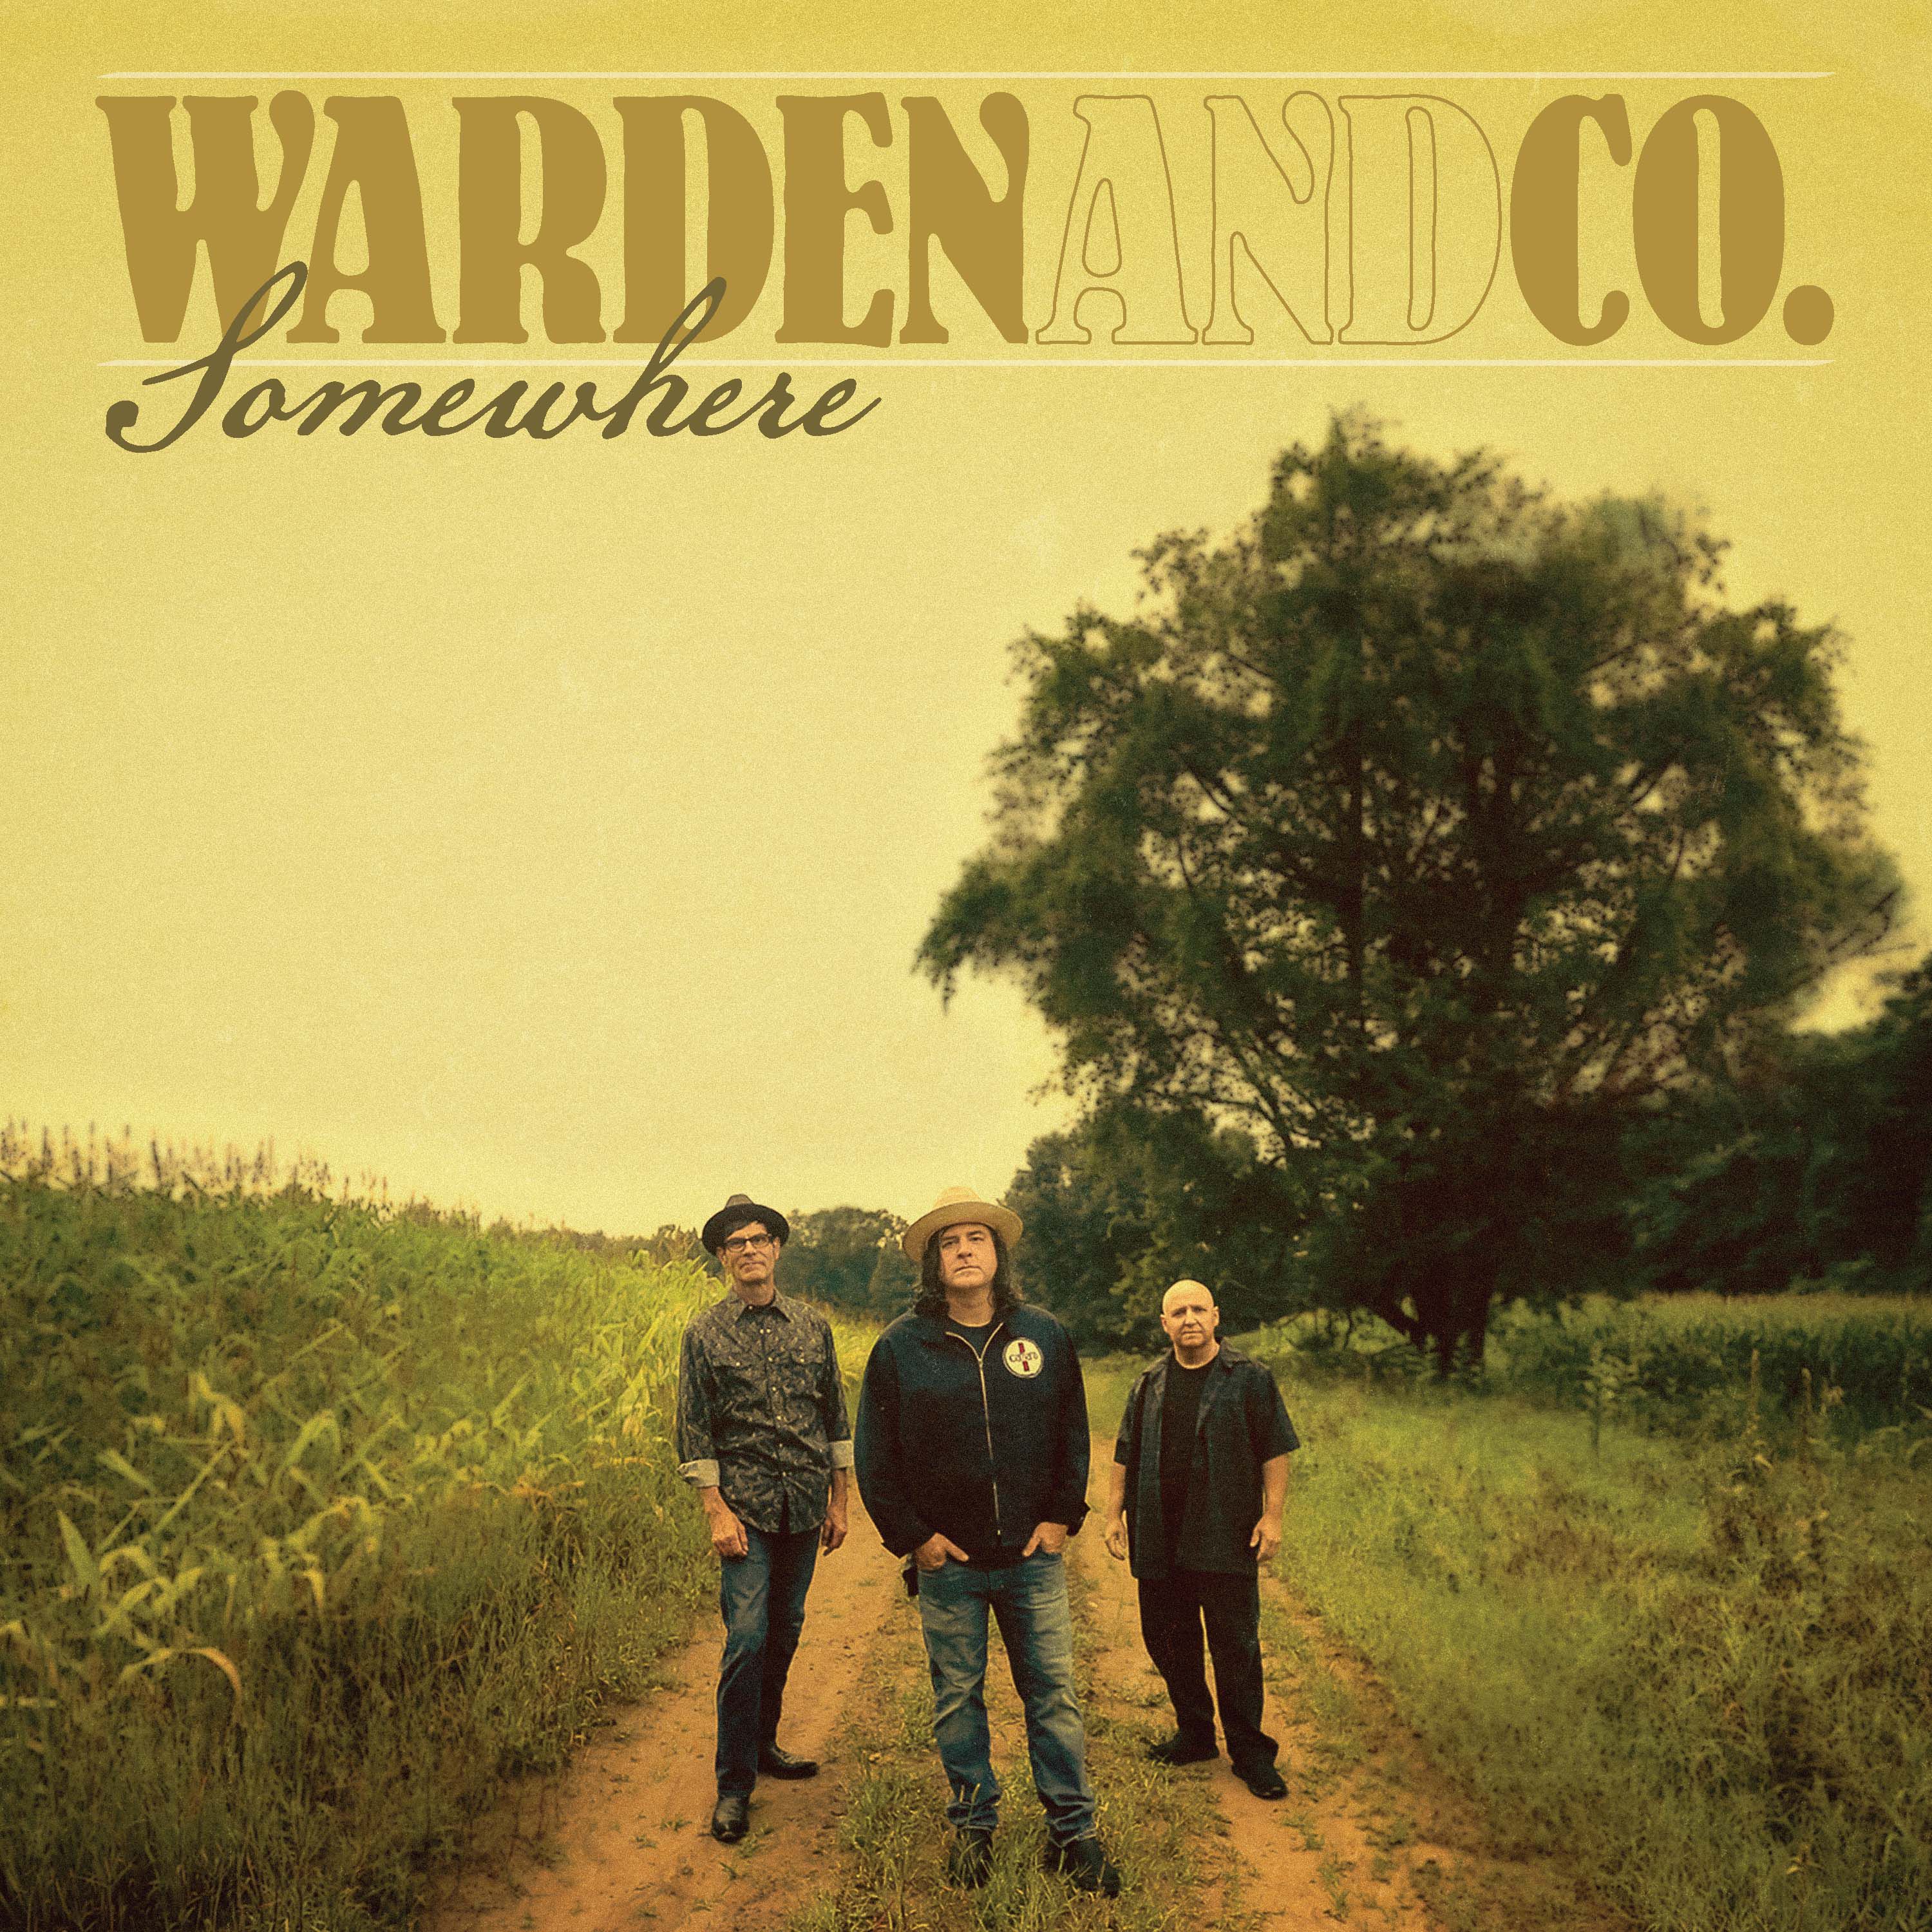 Americana/roots rock/folk trio Warden and Co. release new album, Somewhere